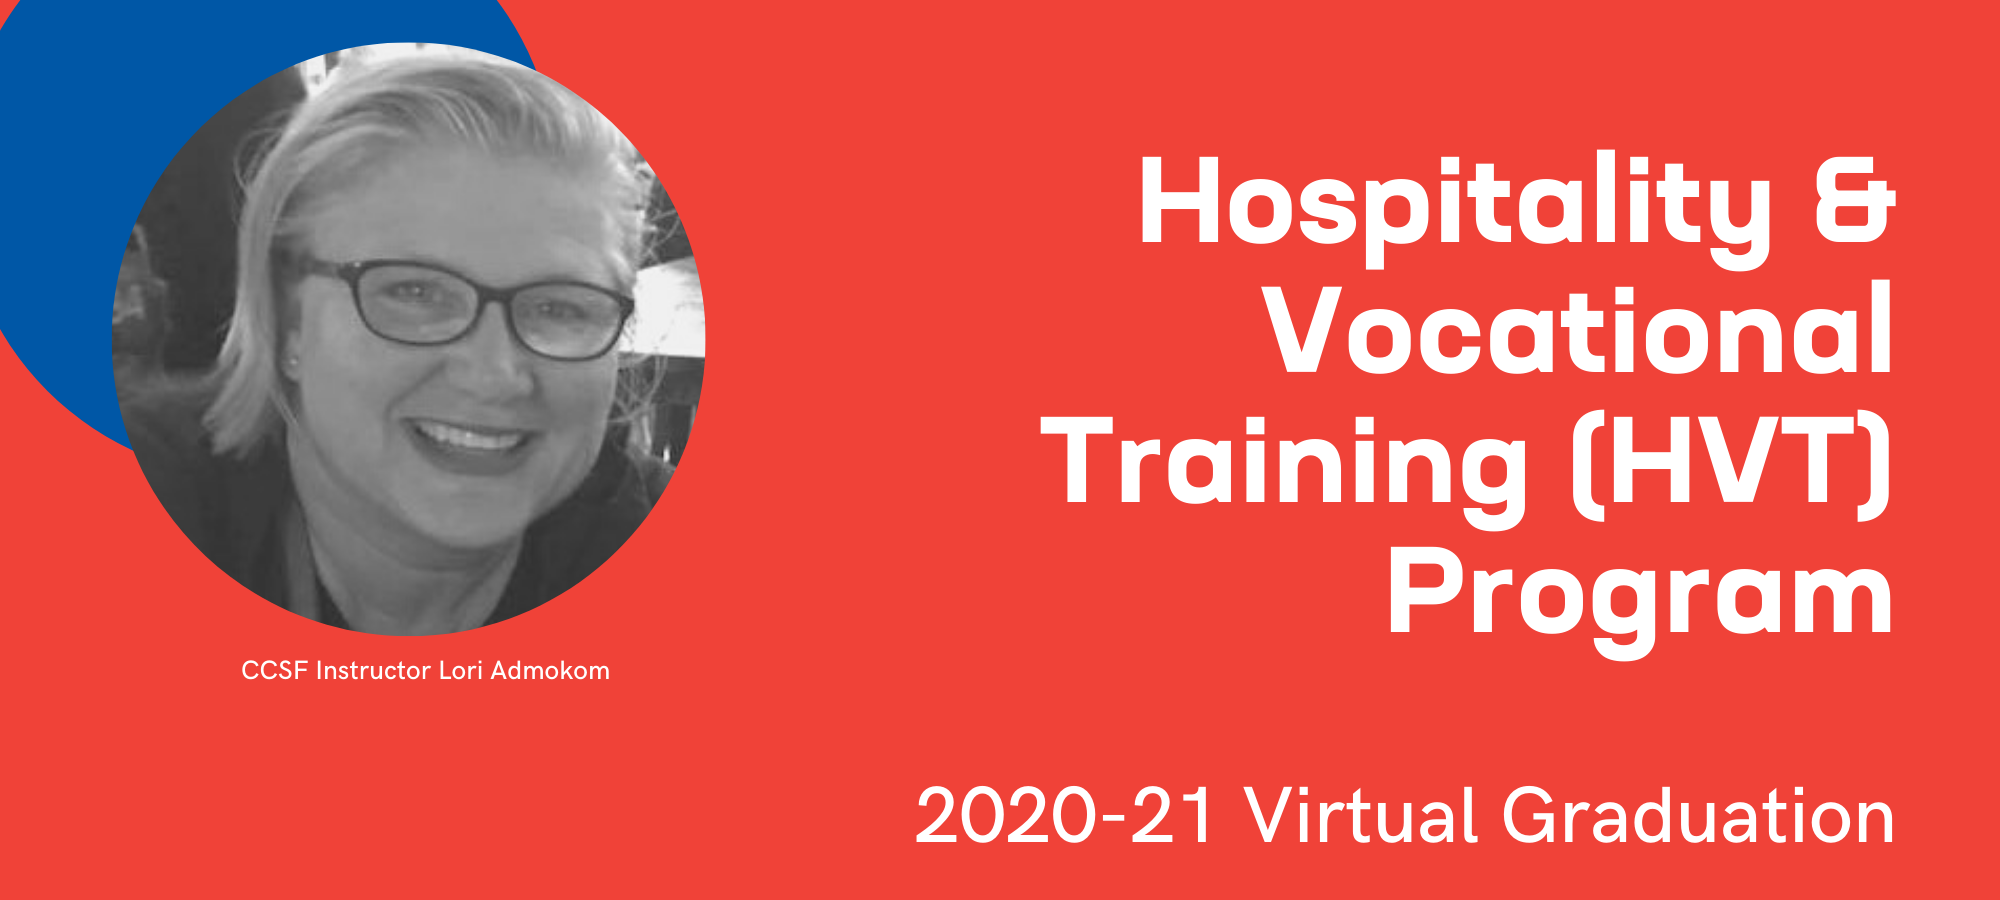 Hospitality and Vocational Training Program: 2020-21 Virtual Graduation